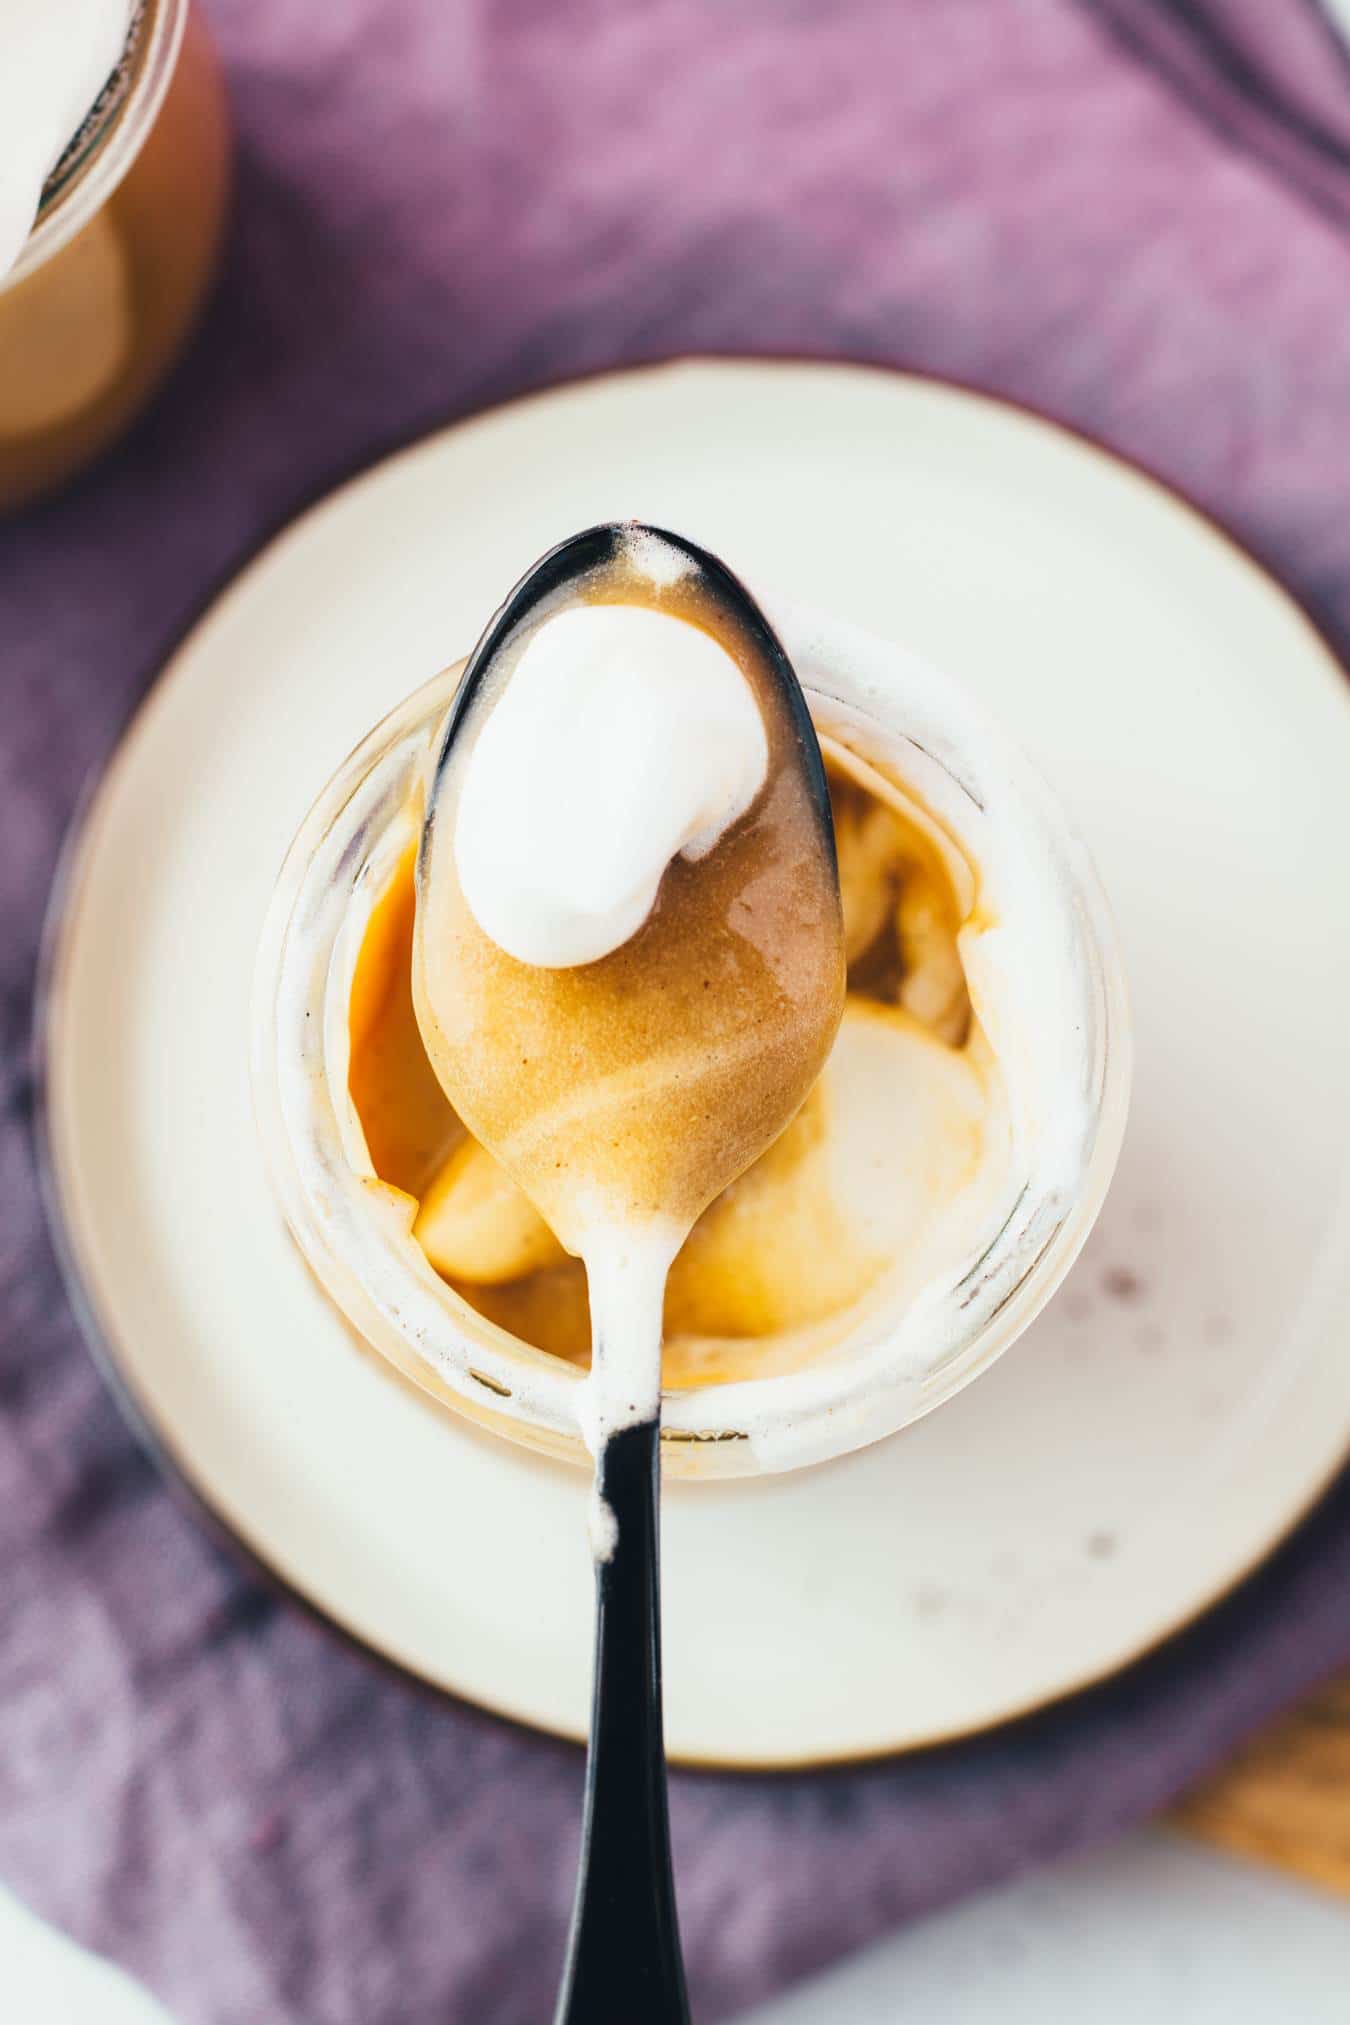 HOW TO Make Vegan Caramel Pudding Yourself (4 Ingredients!) Recipe